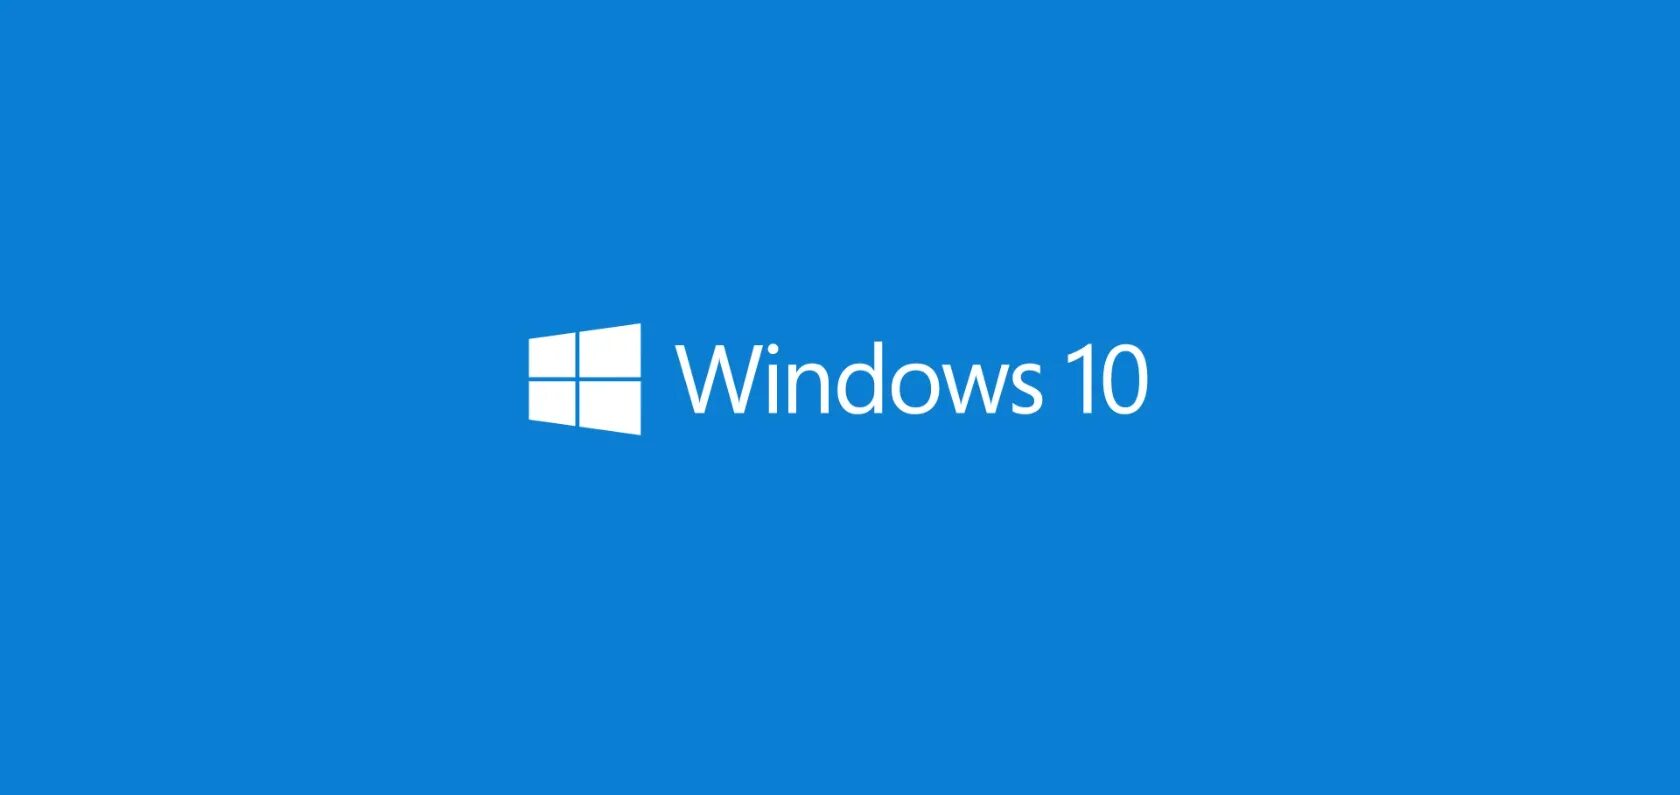 Windows 10 200. Виндовс 10. ОС Windows 10. Microsoft Windows 10. Операционная система виндовс 10.